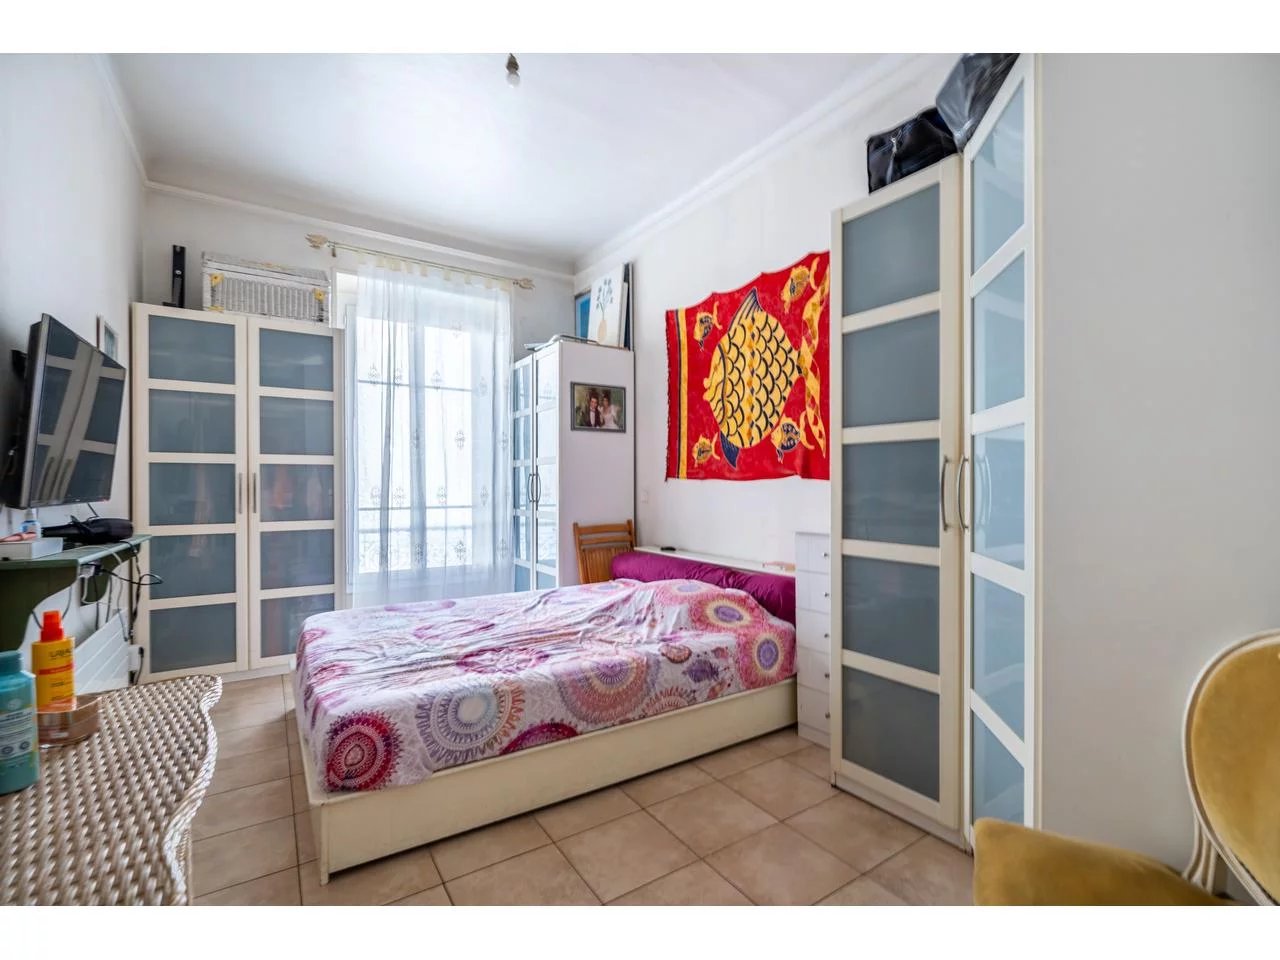 Appartement  5 Locali 136.55m2  In vendita   529 000 €